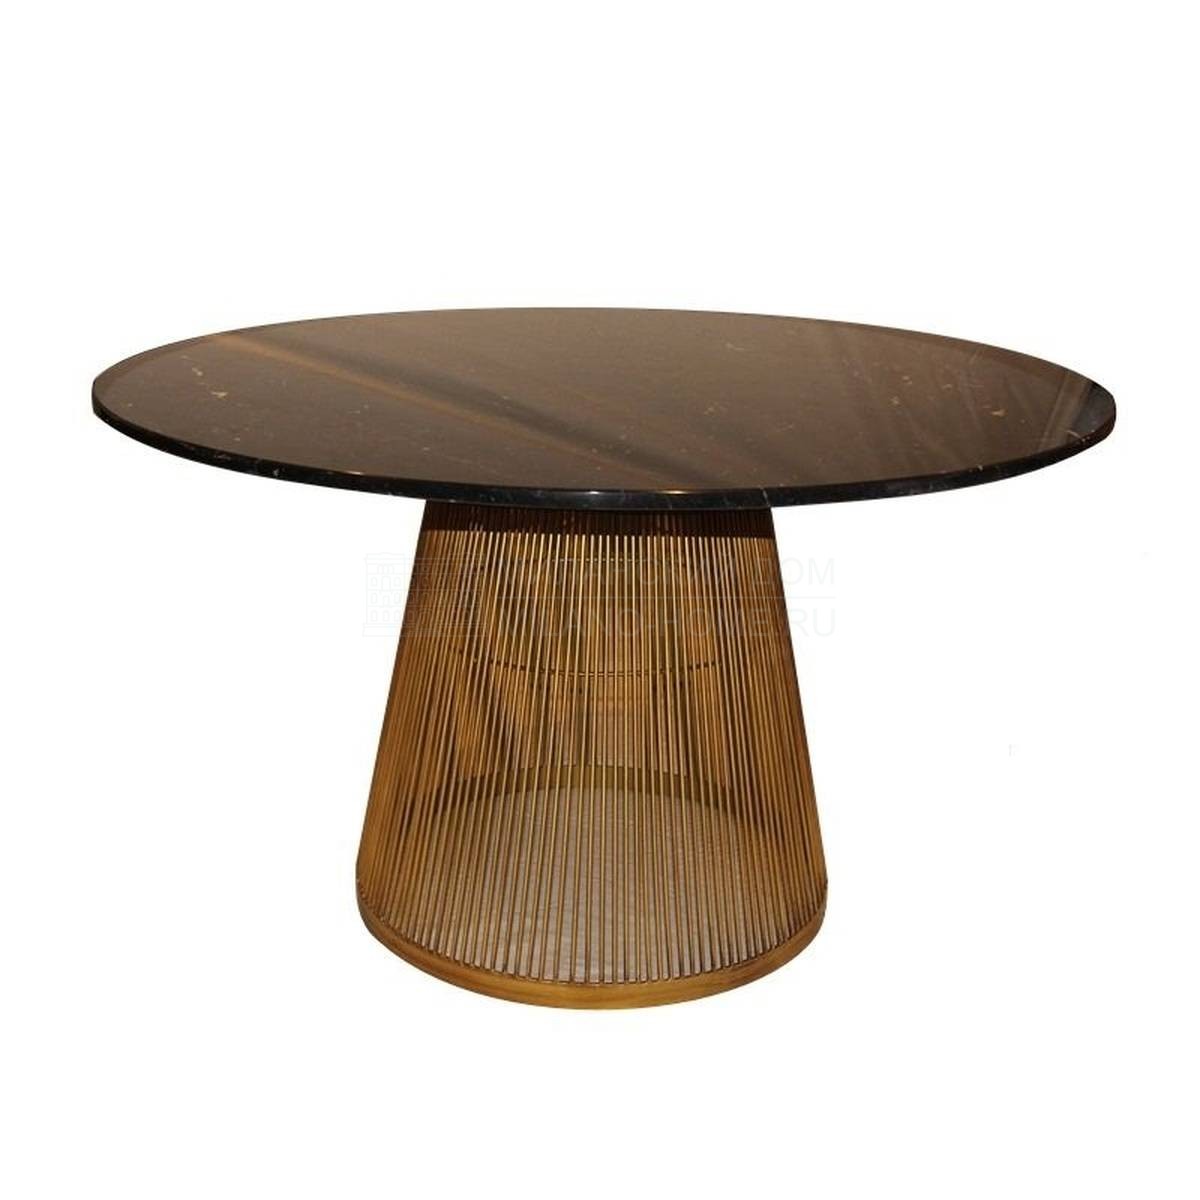 Круглый стол H-11200 round table из Испании фабрики GUADARTE